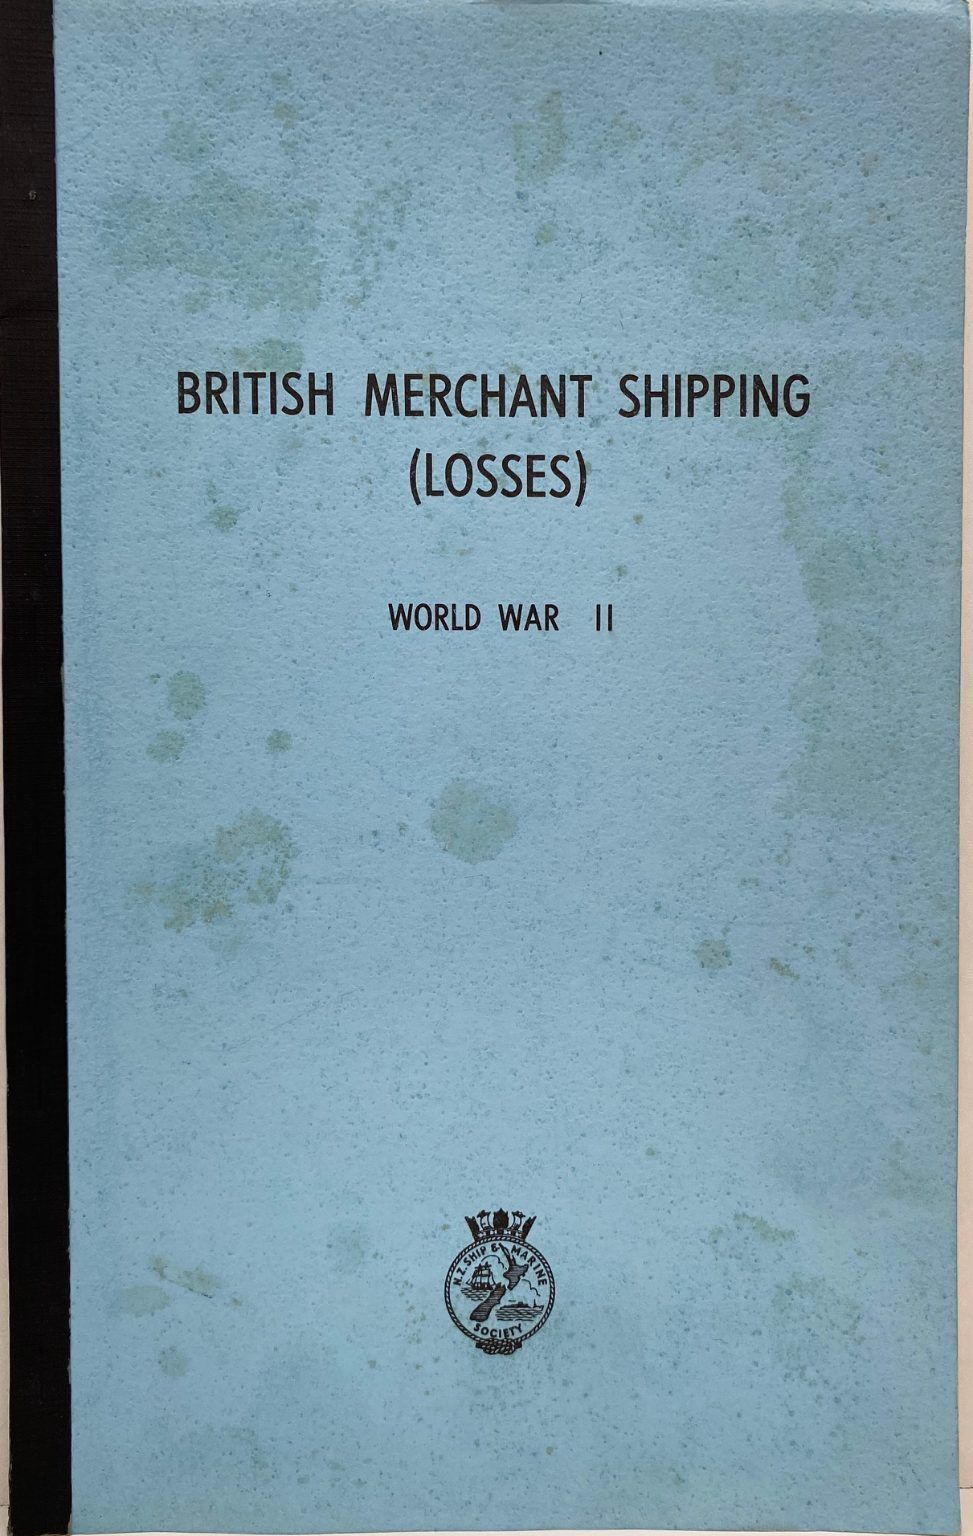 BRITISH MERCHANT SHIPPING (LOSSES) WORLD WAR II 1939 - 1945